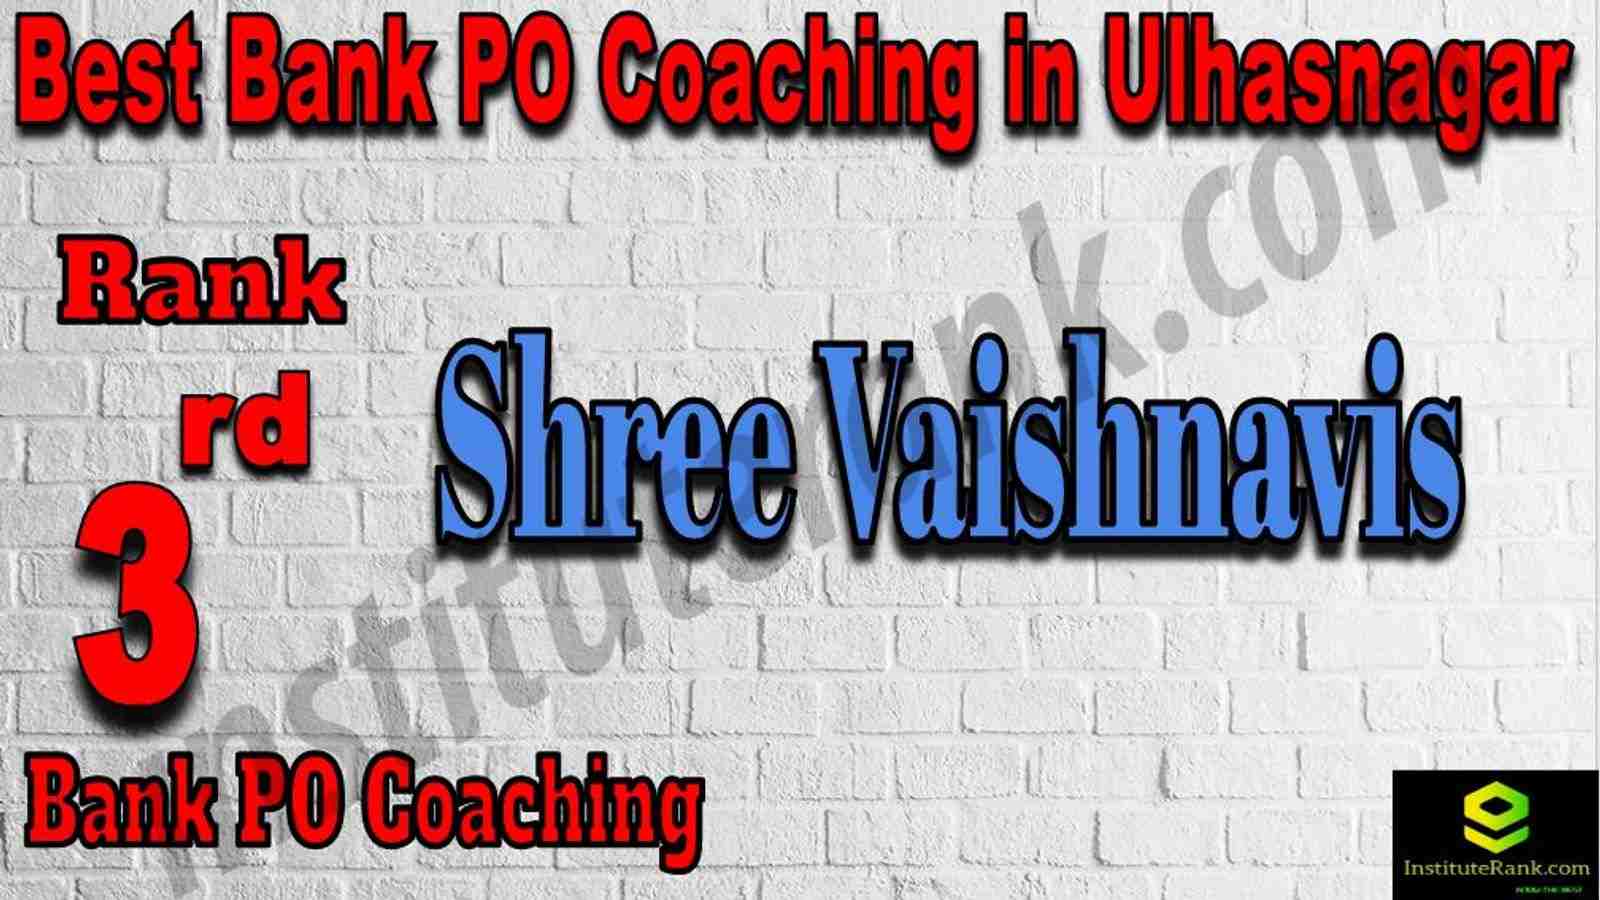 3rd Best Bank PO Coaching in Ulhasnagar